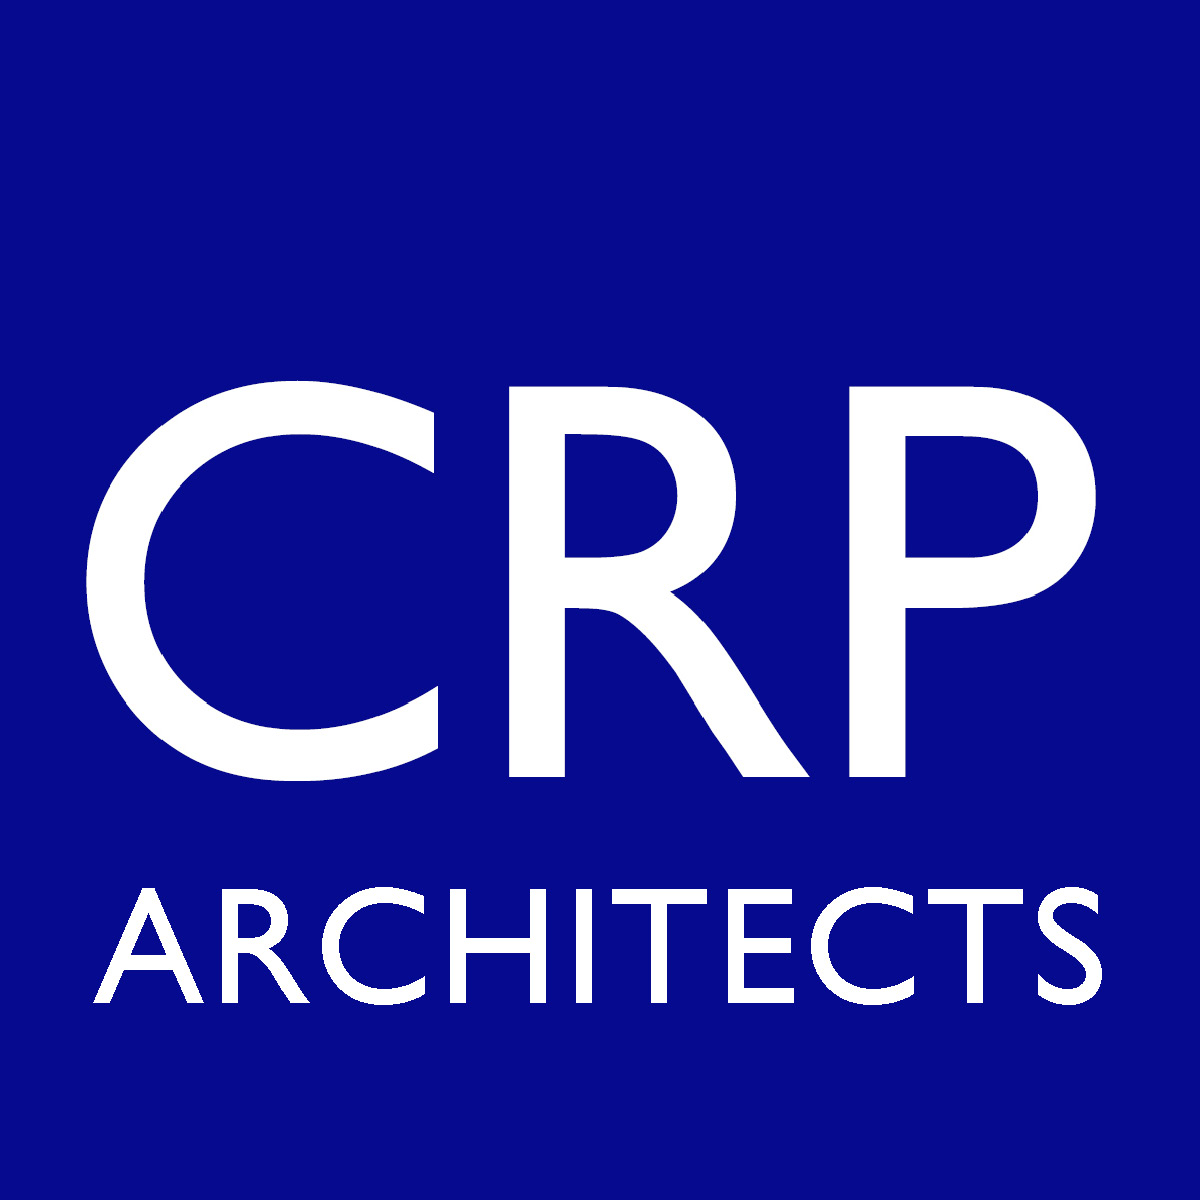 CRP Architects, PC